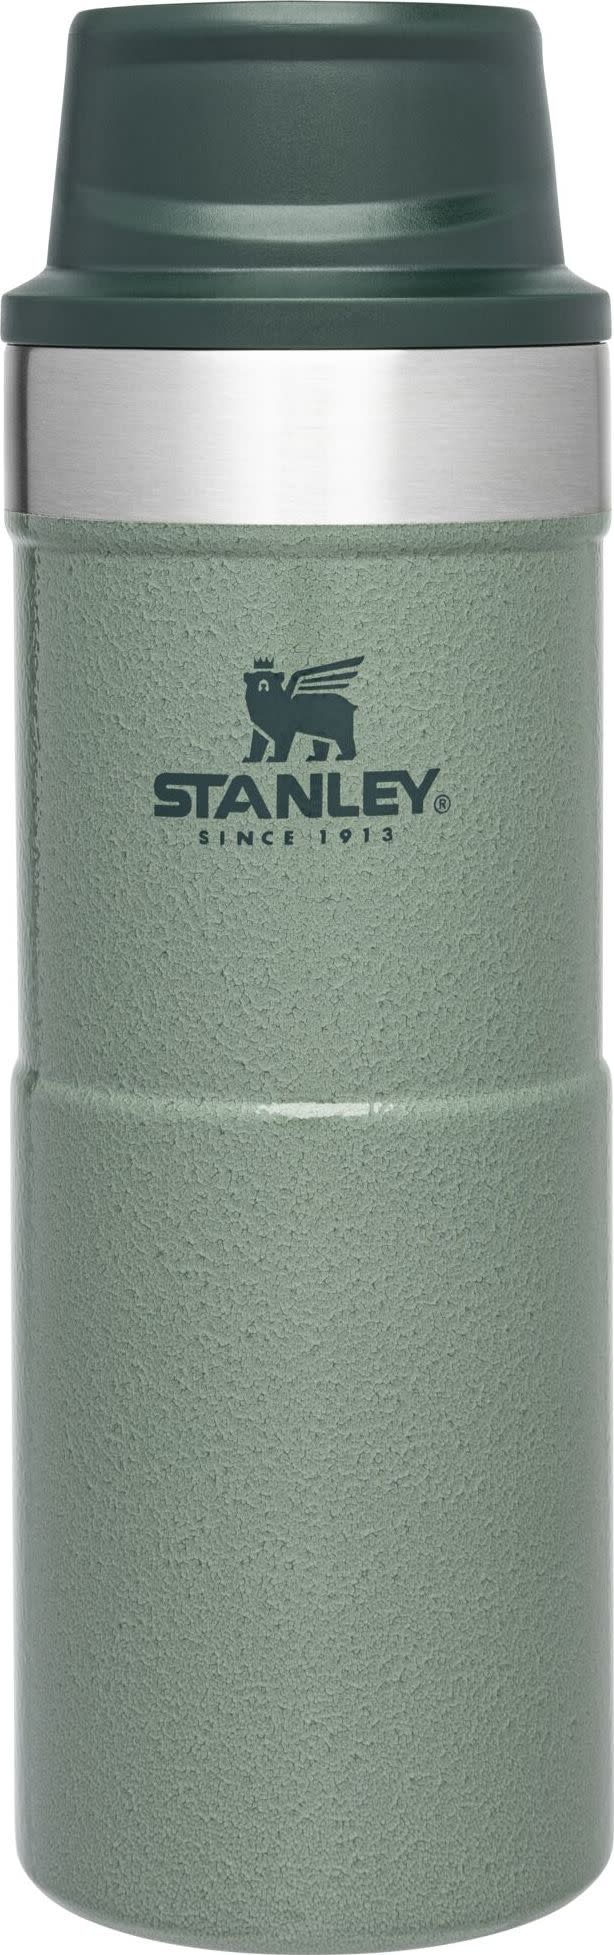 Stanley The Trigger-Action Travel Mug 0.35 L Hammertone Green Stanley